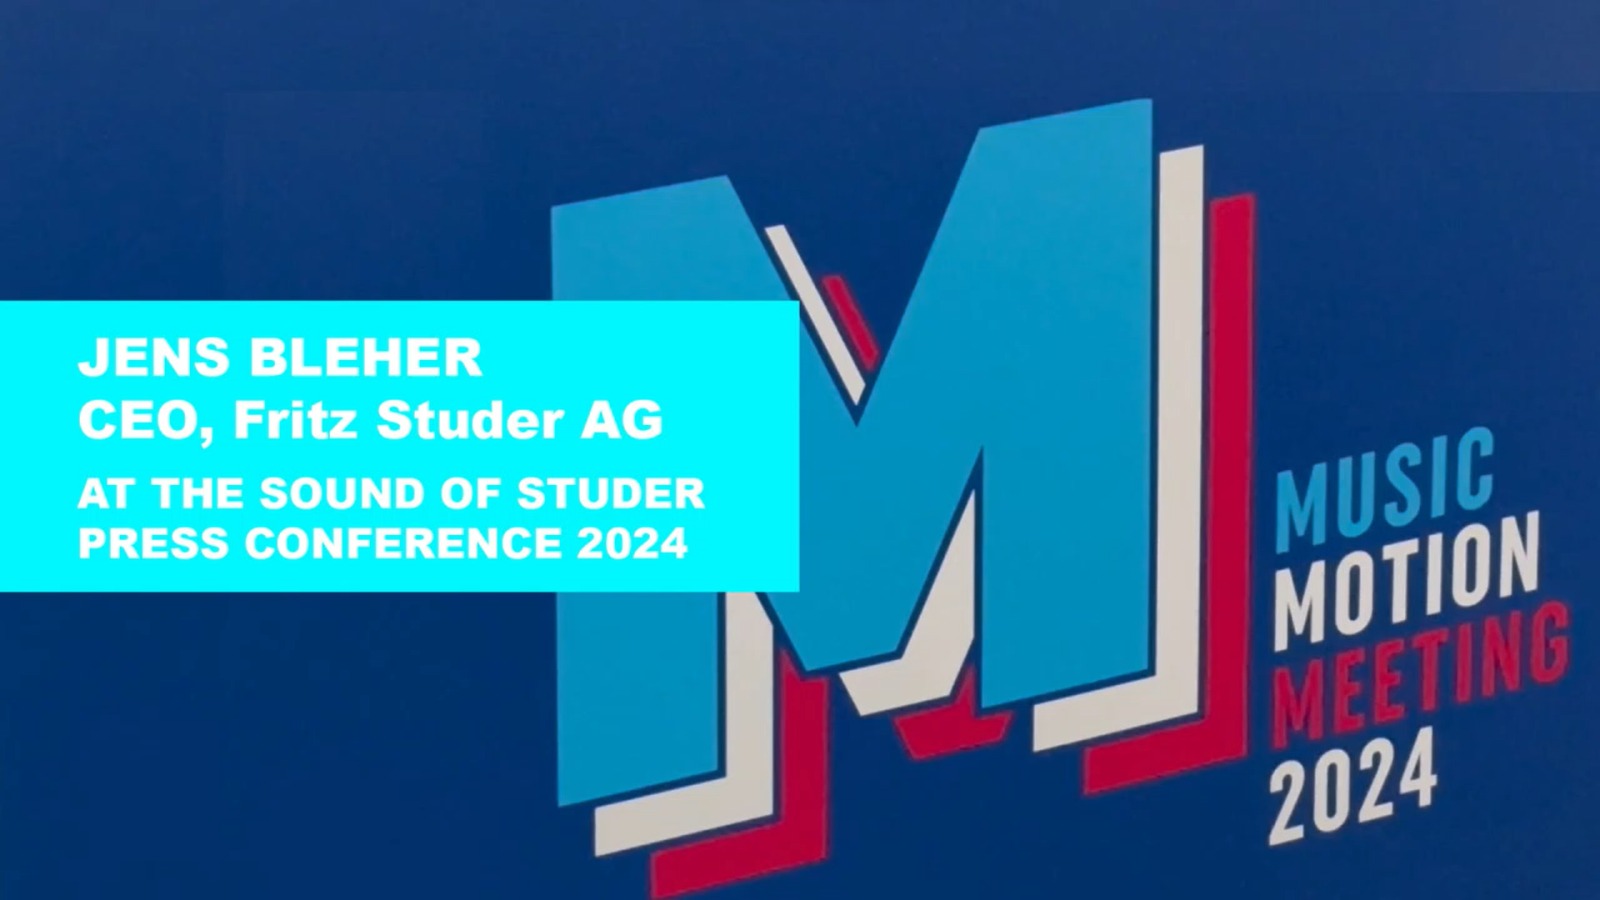 Jens Bleher, CEO, Fritz Studer AG at the Sound of Studer Press Conference 2024